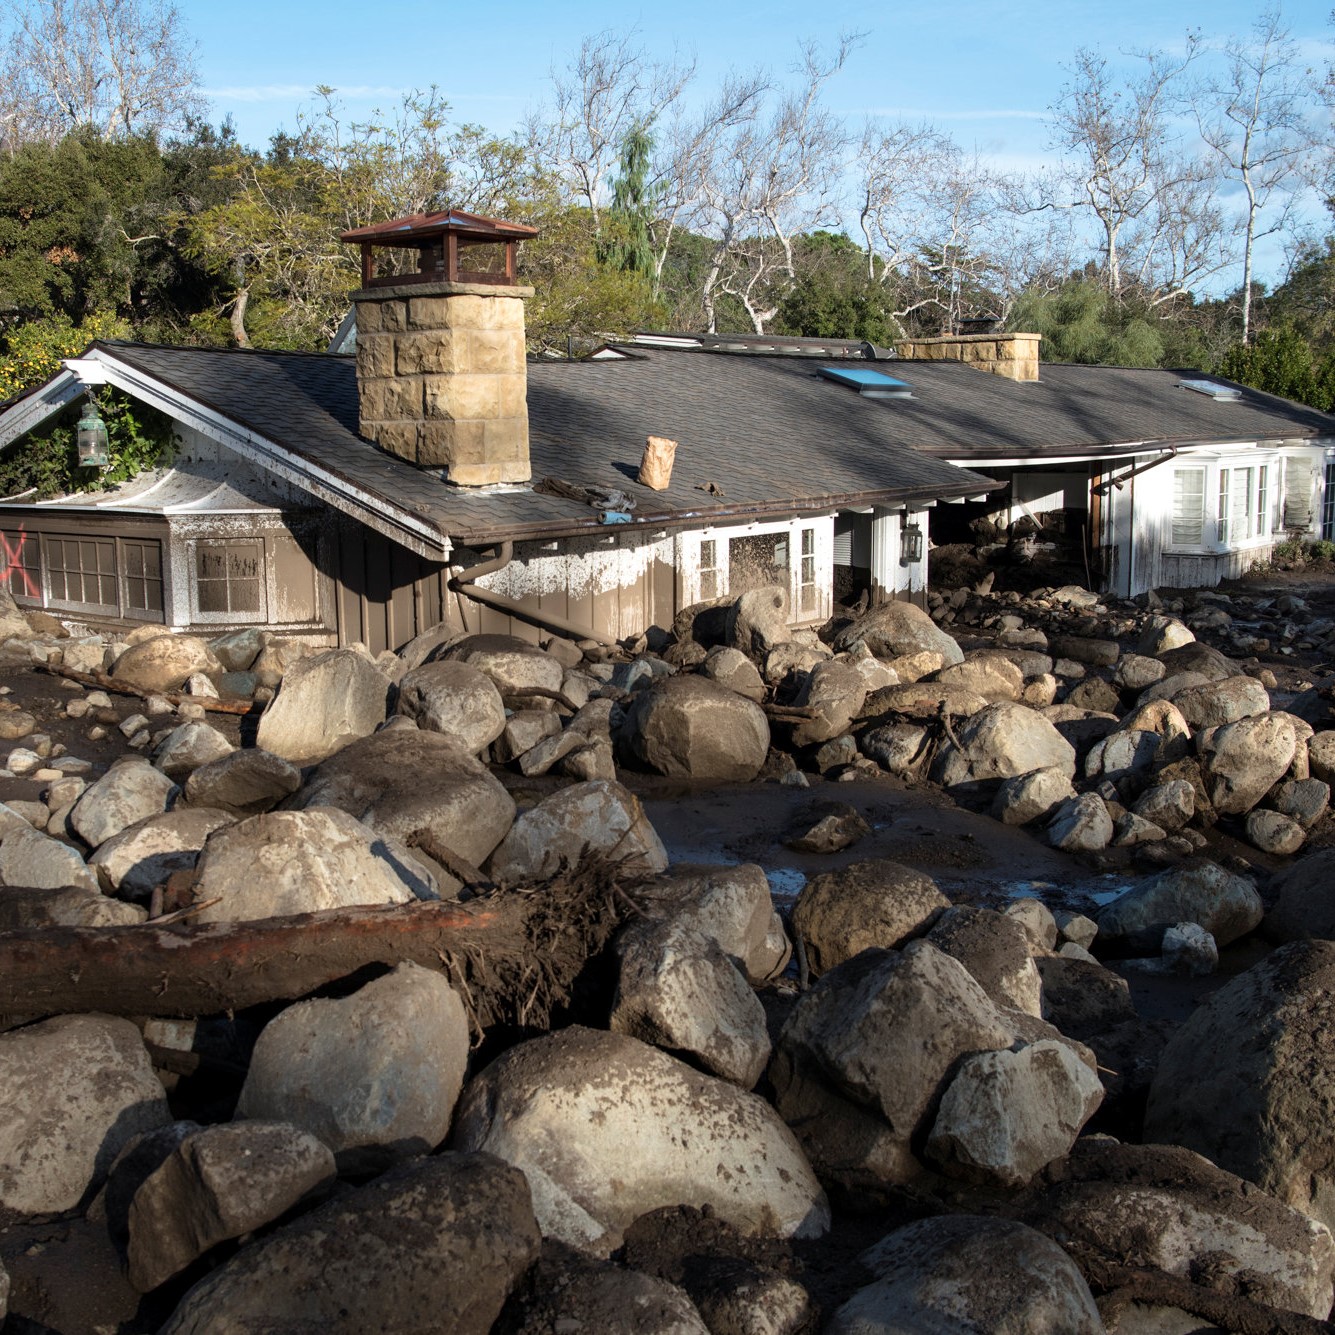 Yesterday was the 1-year anniversary of the mudflow in Santa Barbara's Montecito area